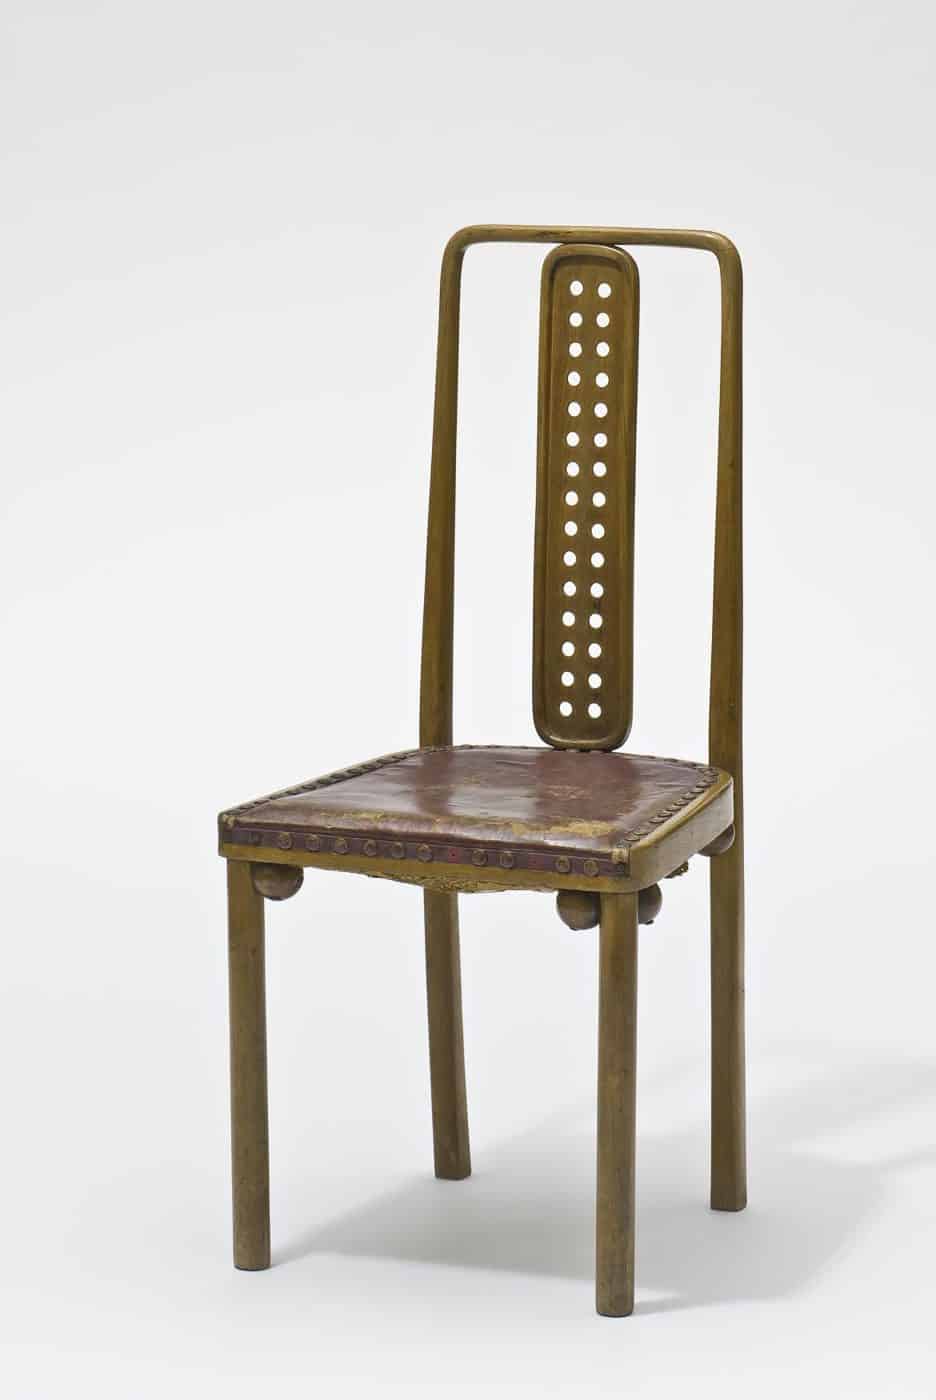 Chair designed by J. & J. Kohn